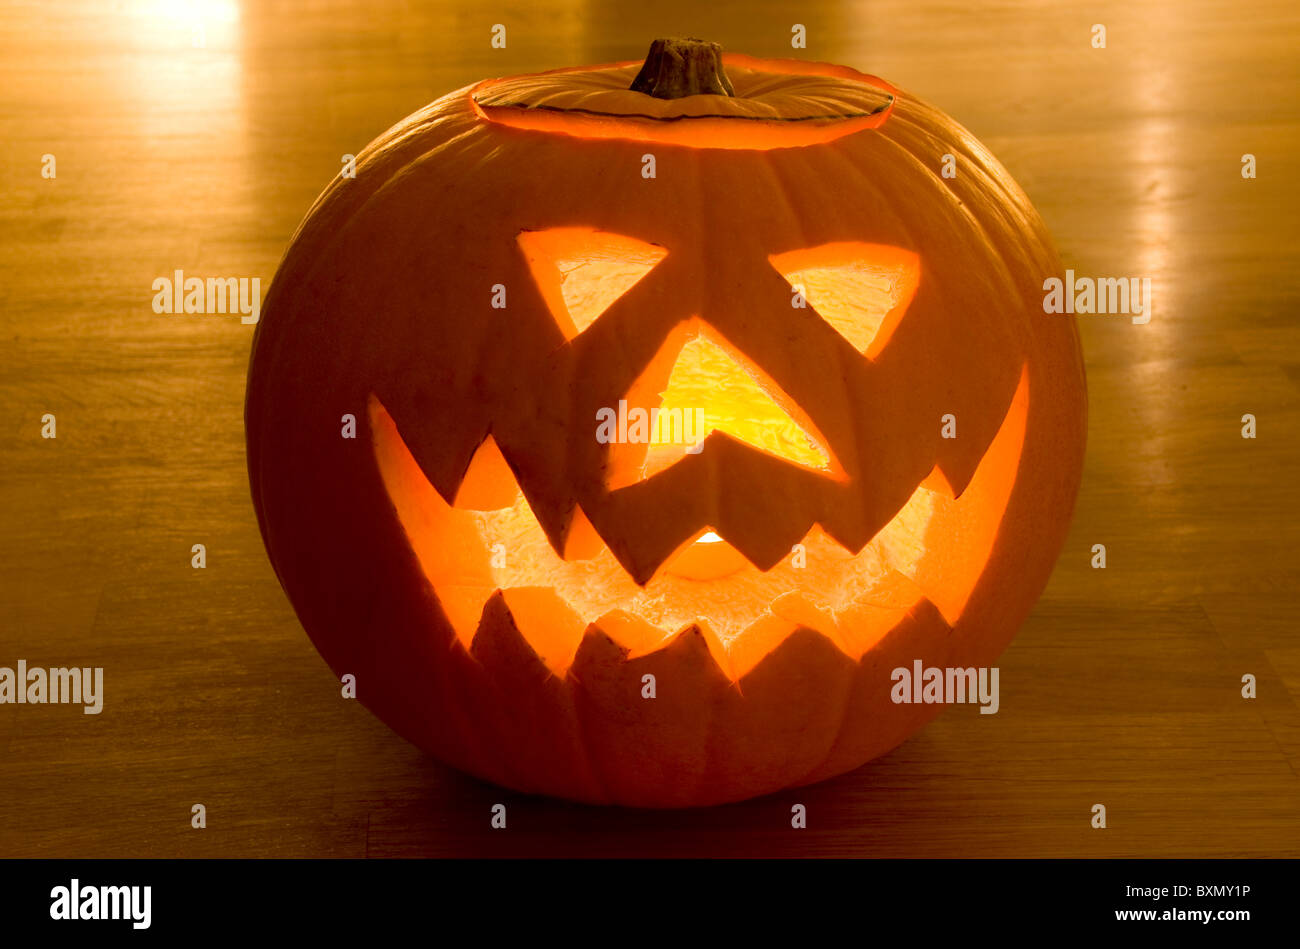 Halloween Pumpkin Head on Wooden Floor Stock Photo